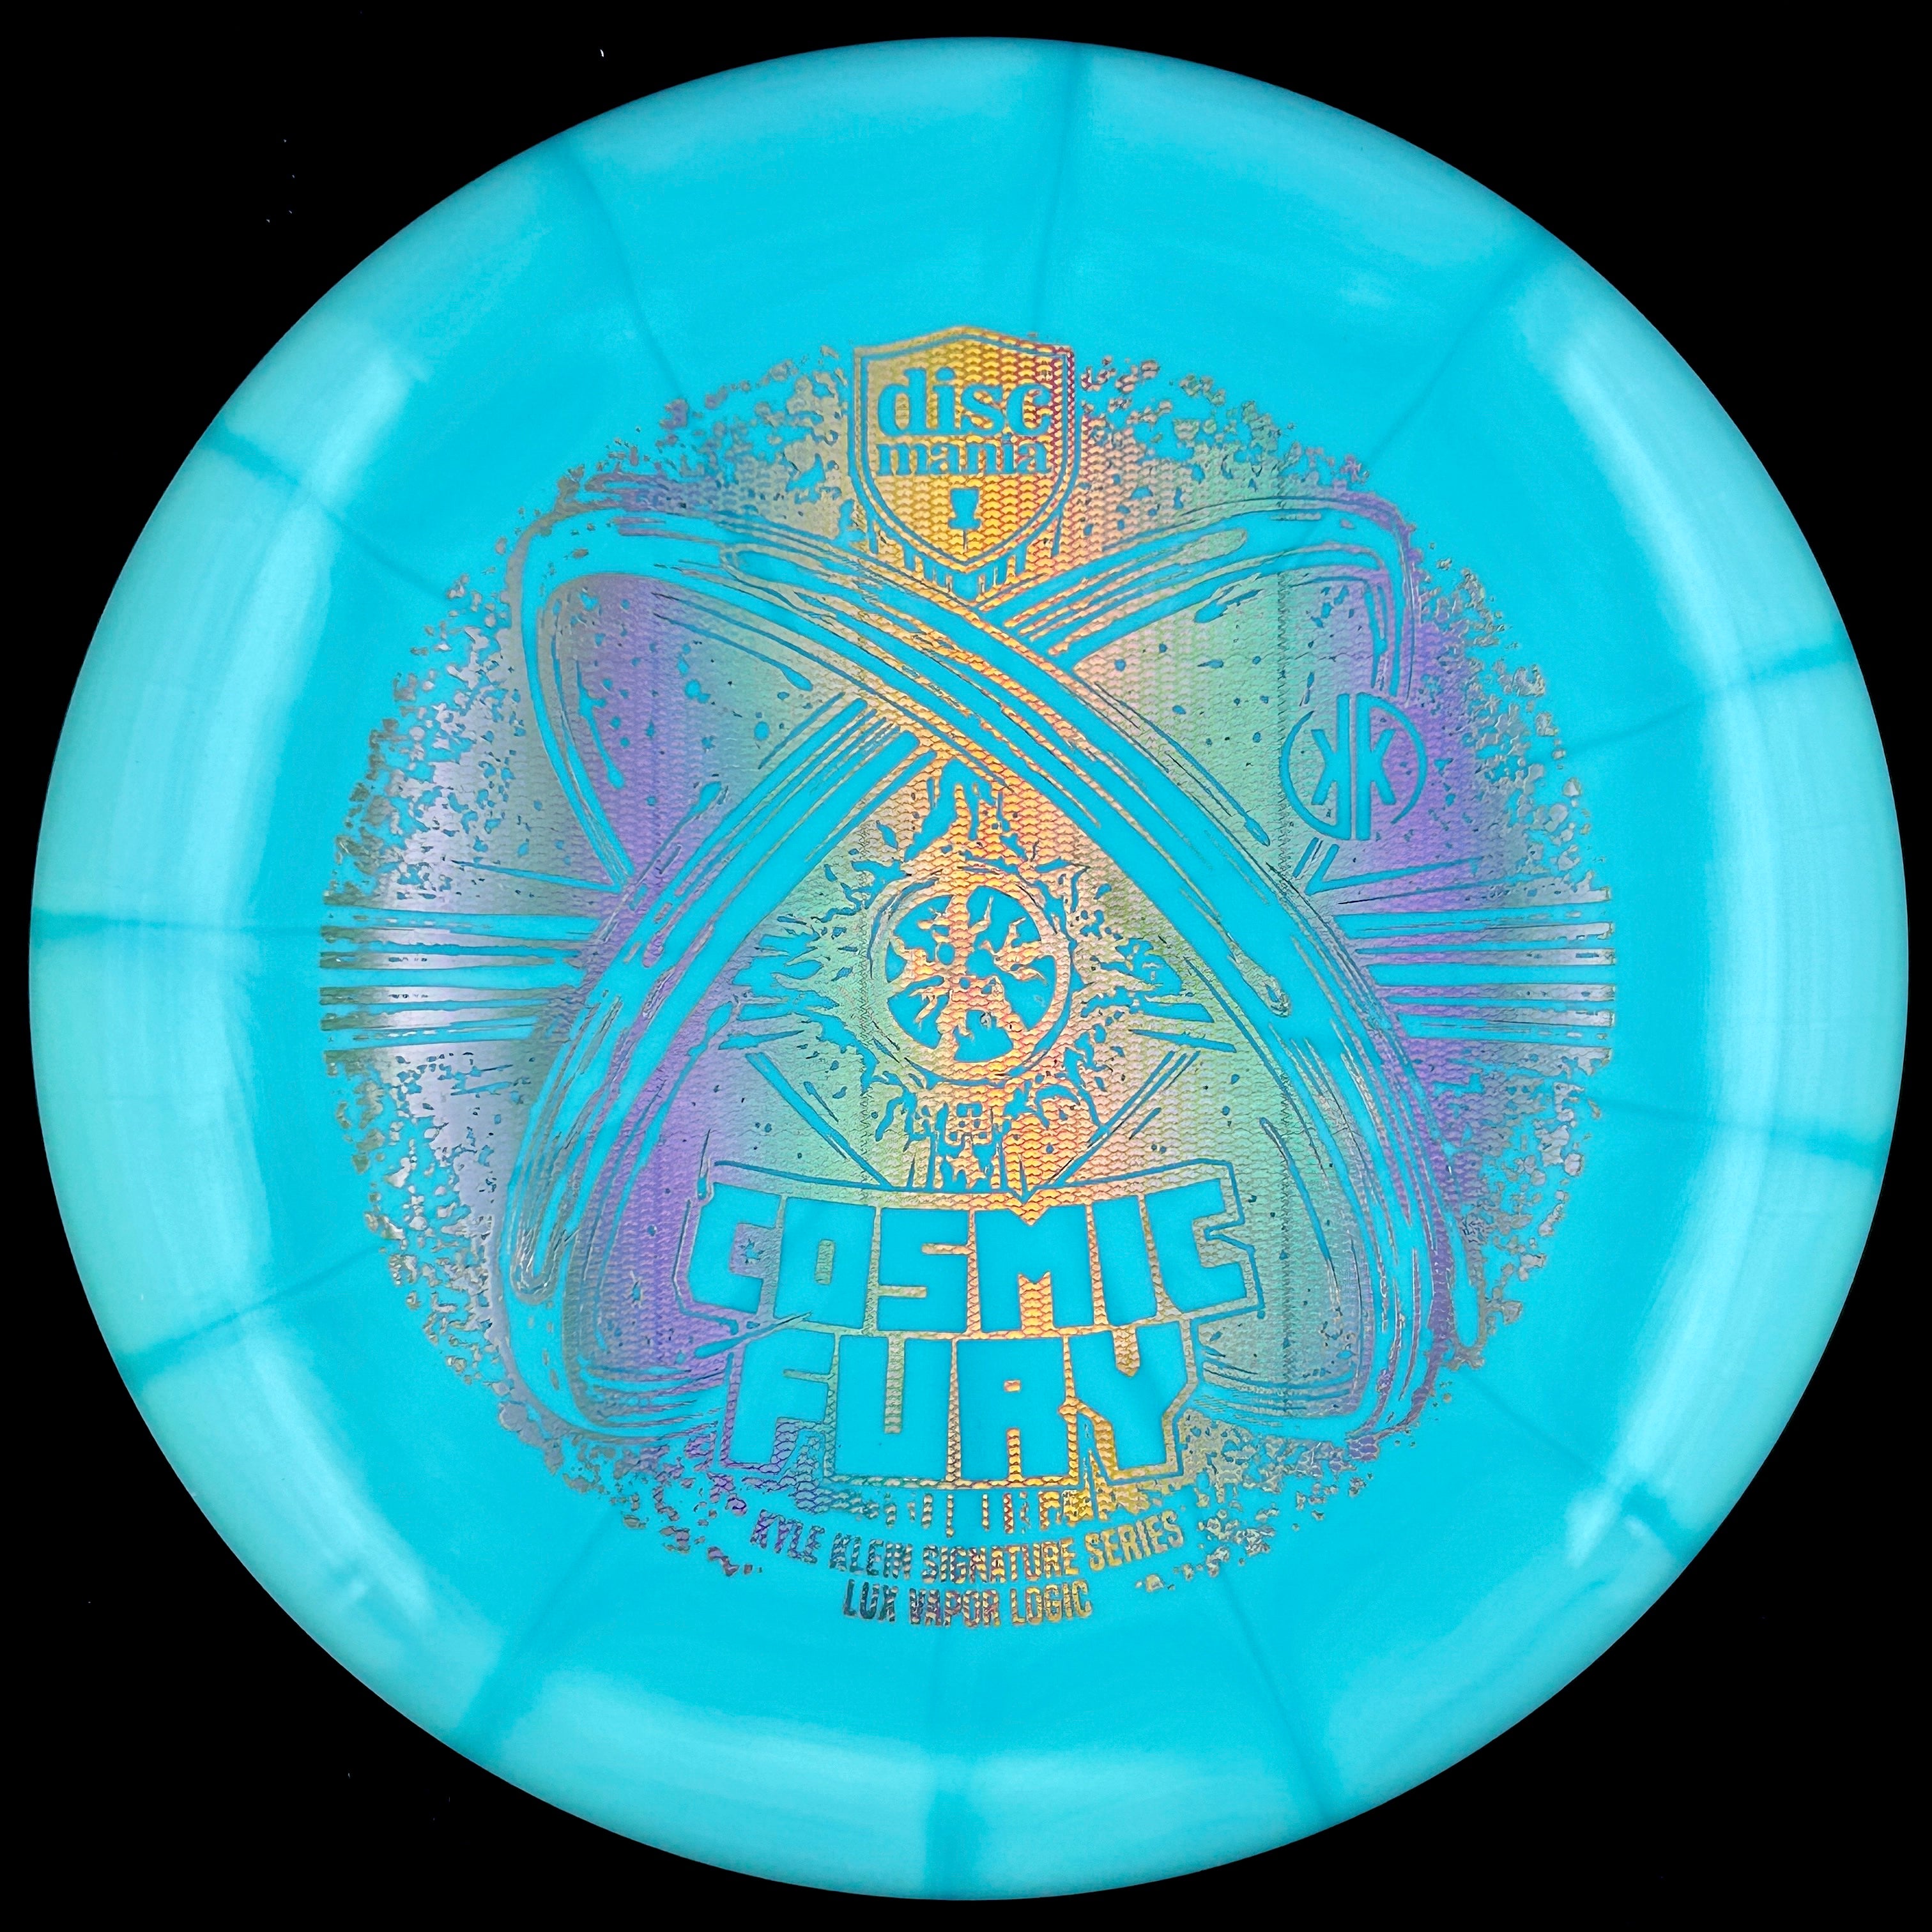 Discmania Cosmic Fury - Kyle Klein Signature Series Lux Vapor Logic